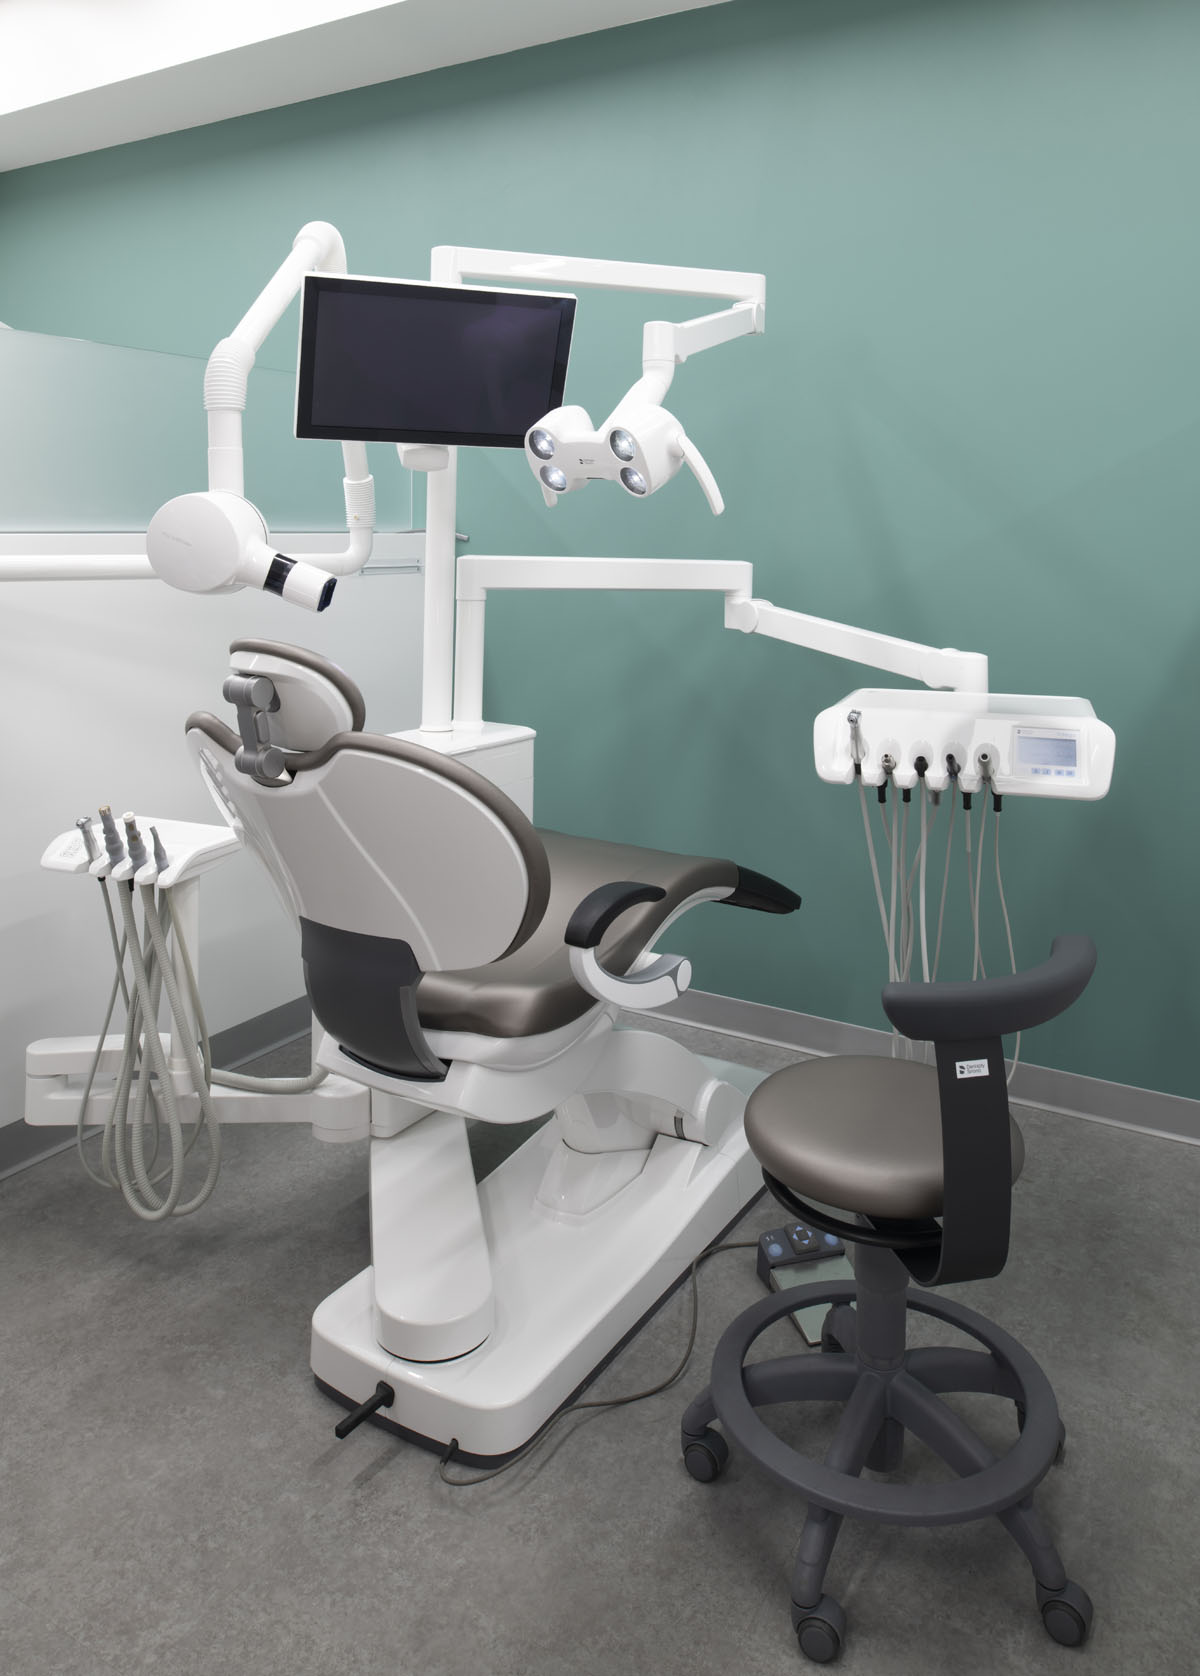 Traitement orthodontique - Dental Travels